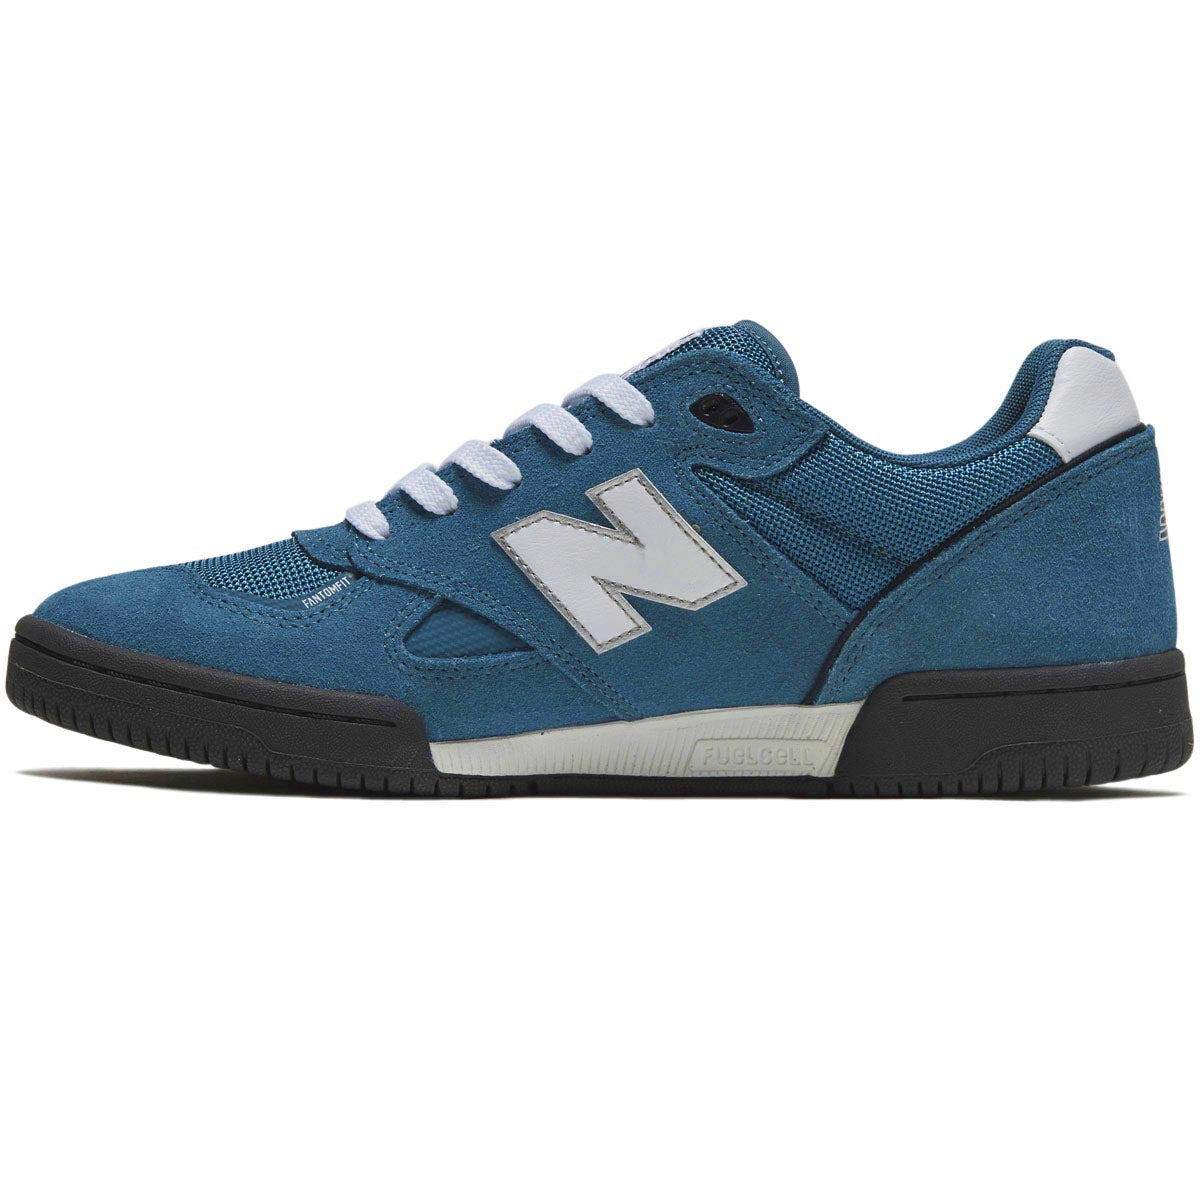 New Balance 600 Tom Knox Shoes - Elemental Blue/Black image 2